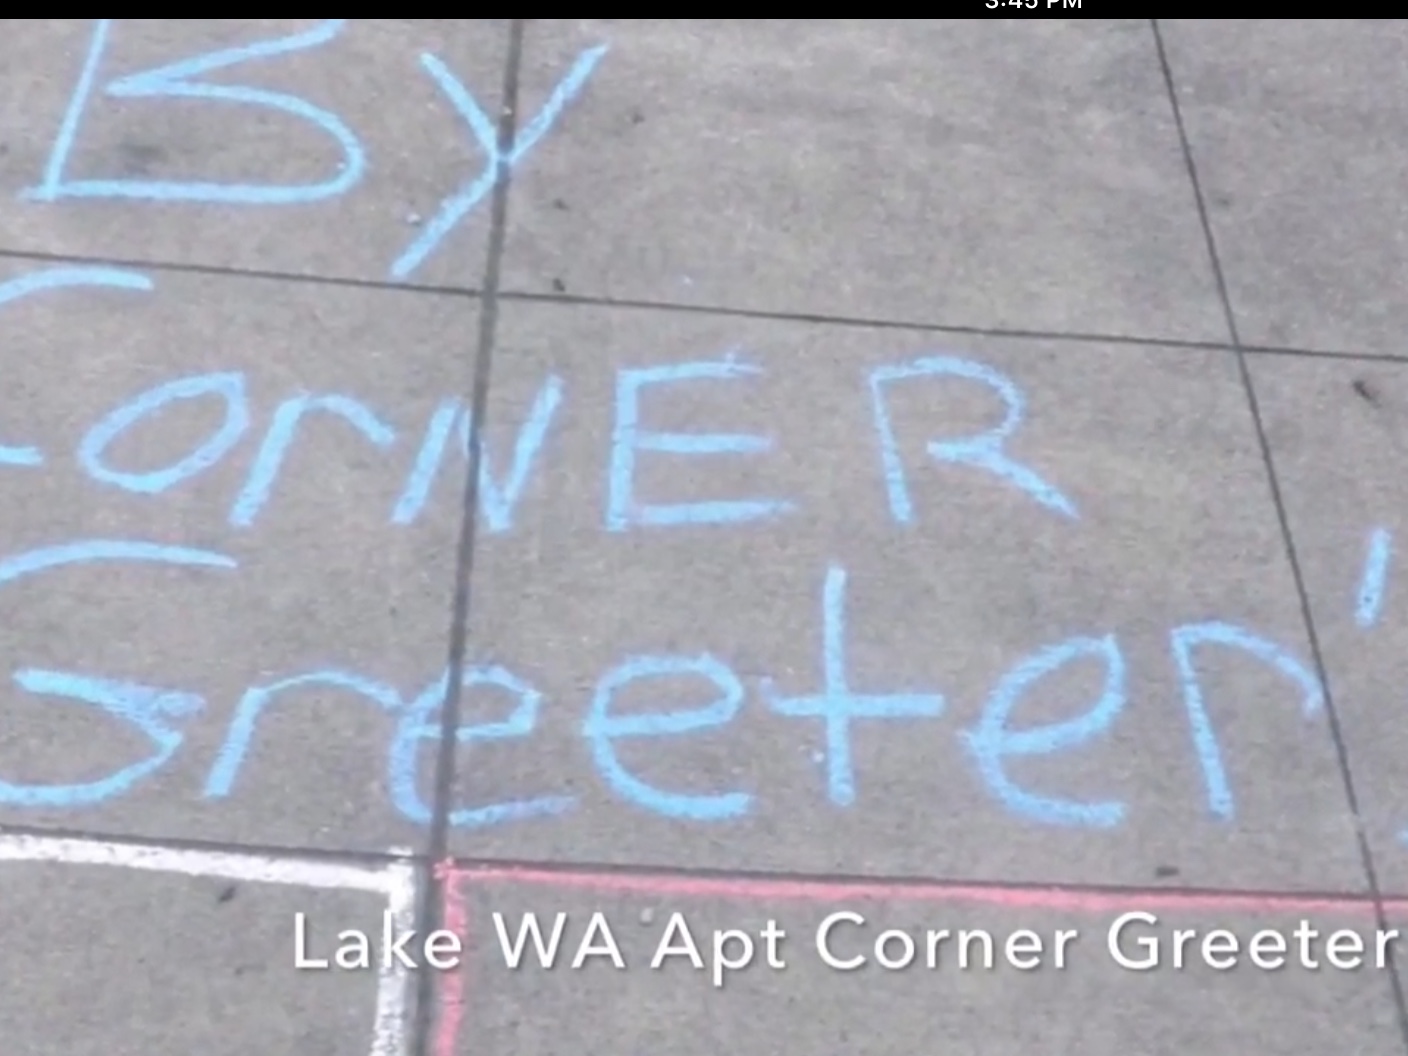 Lake Washington Apt Discussion on Youth Homelessness